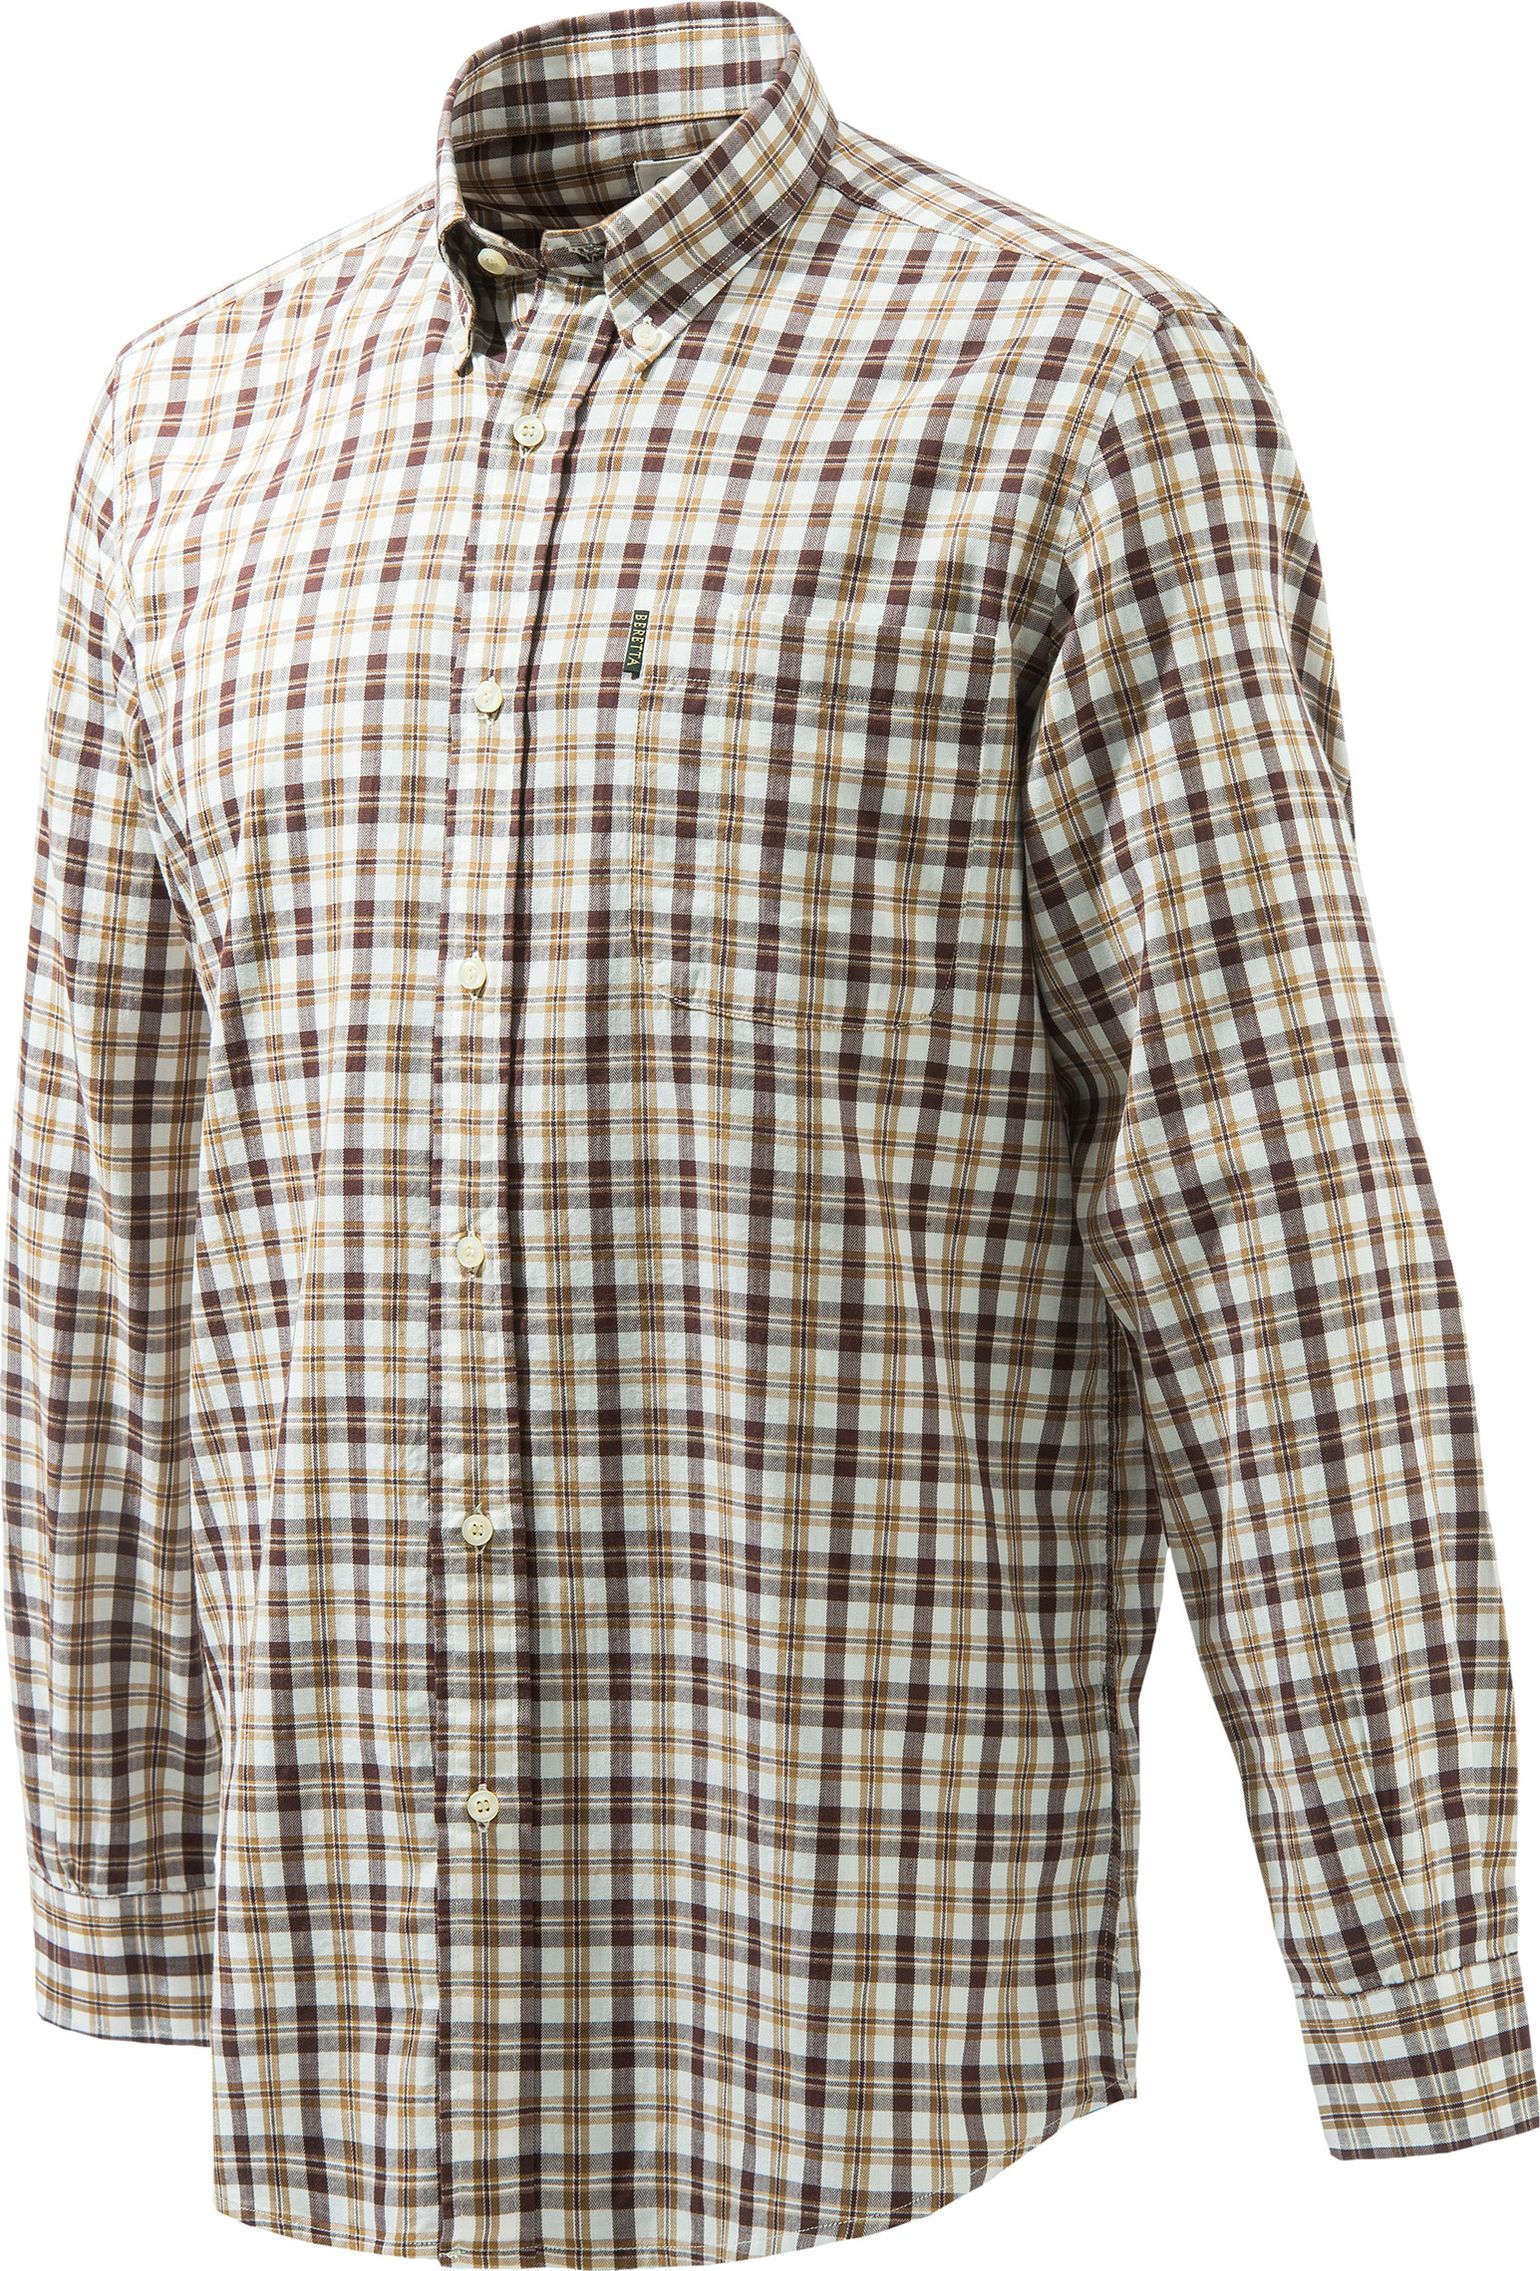 Men's Wood Button Down Shirt Beige & Brunette Check